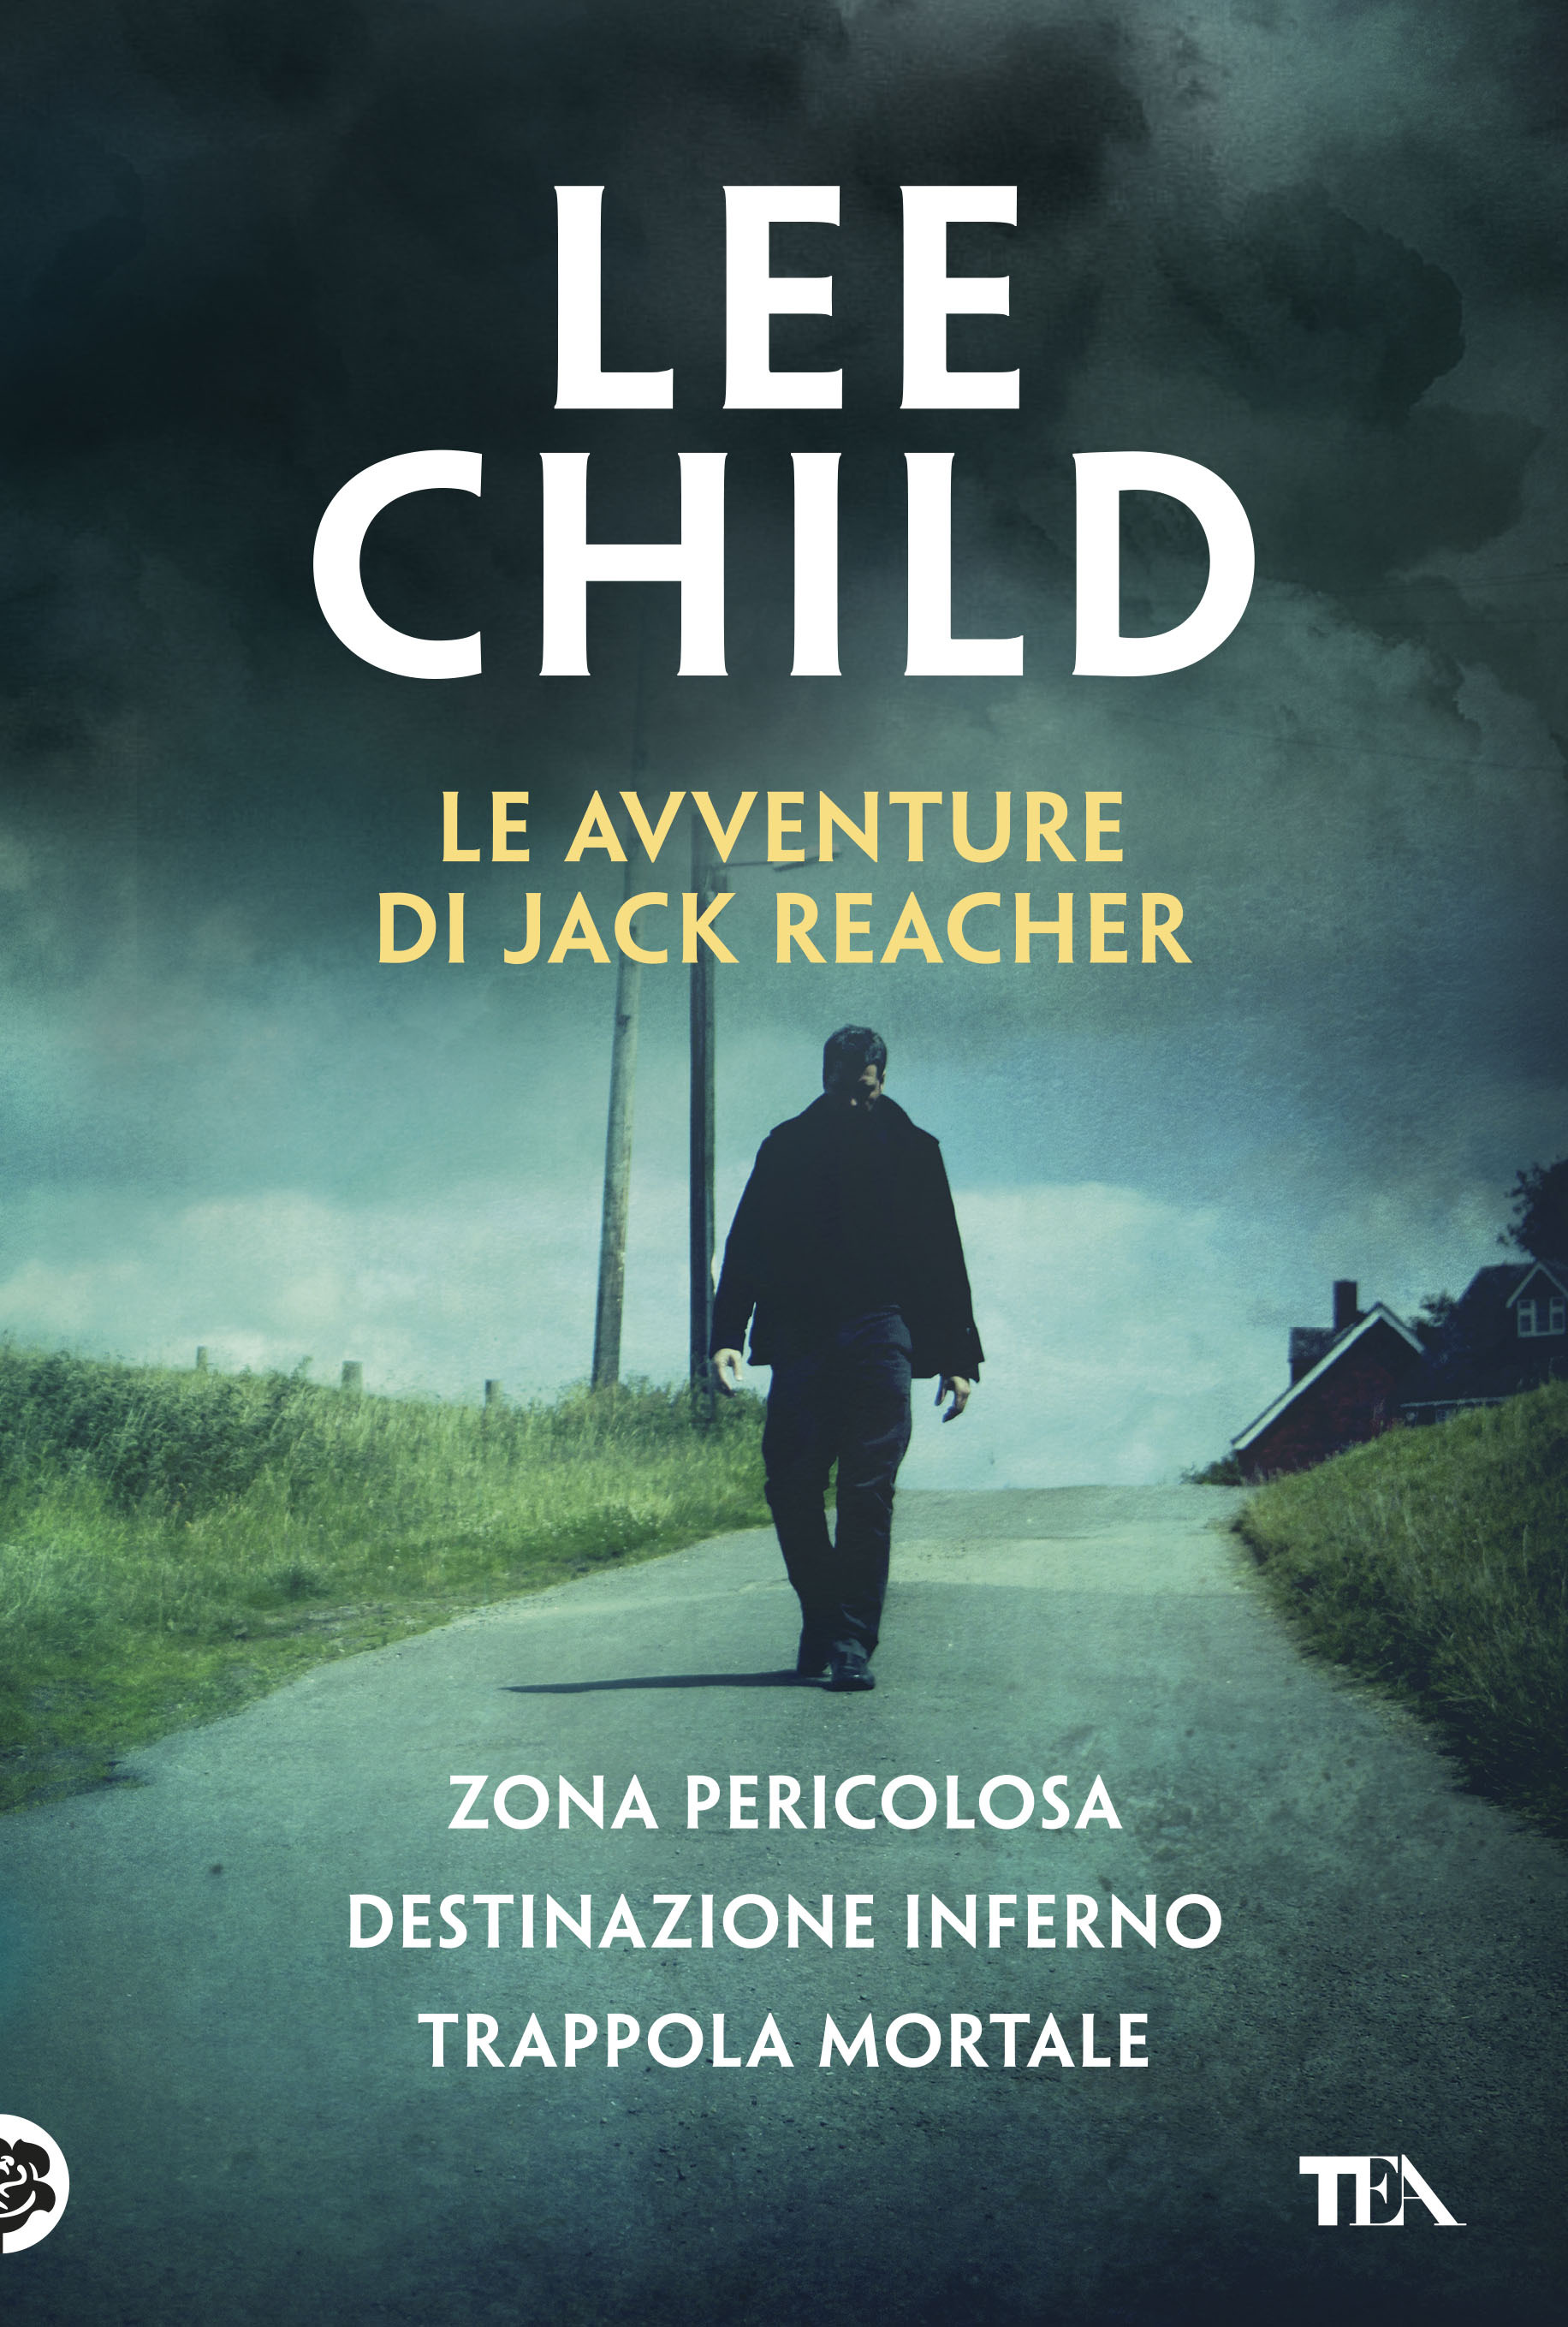 https://www.tealibri.it/libri/lee-child-le-avventure-di-jack-reacher-9788850254620/image